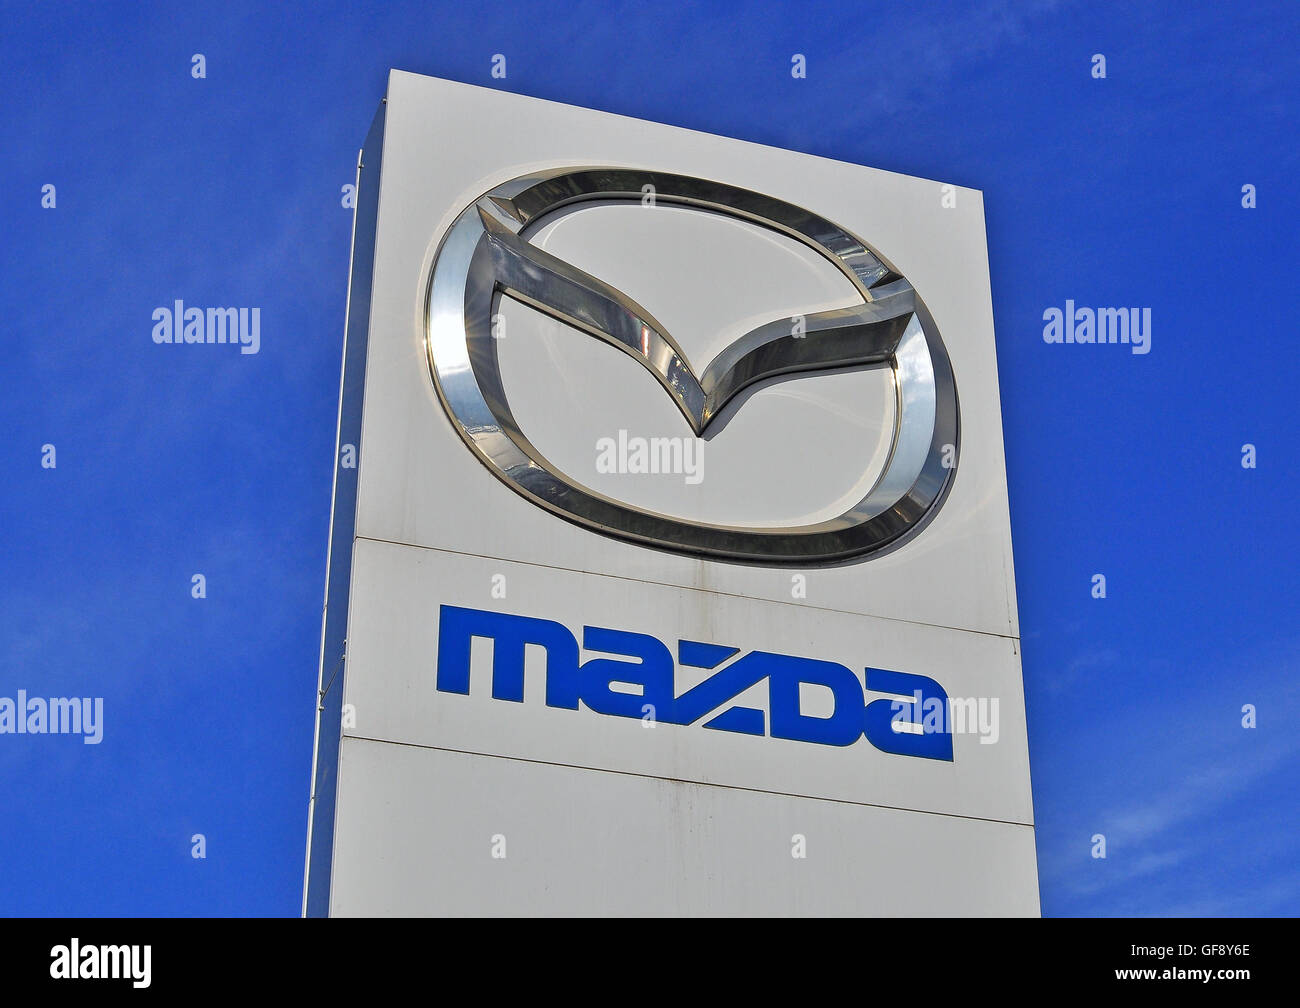 MOSCOW, RUSSIA - OCTOBER 10, 2015: Logotype of Mazda corporation on October 10, 2015. Mazda is the Japanese automotive manufactu Stock Photo